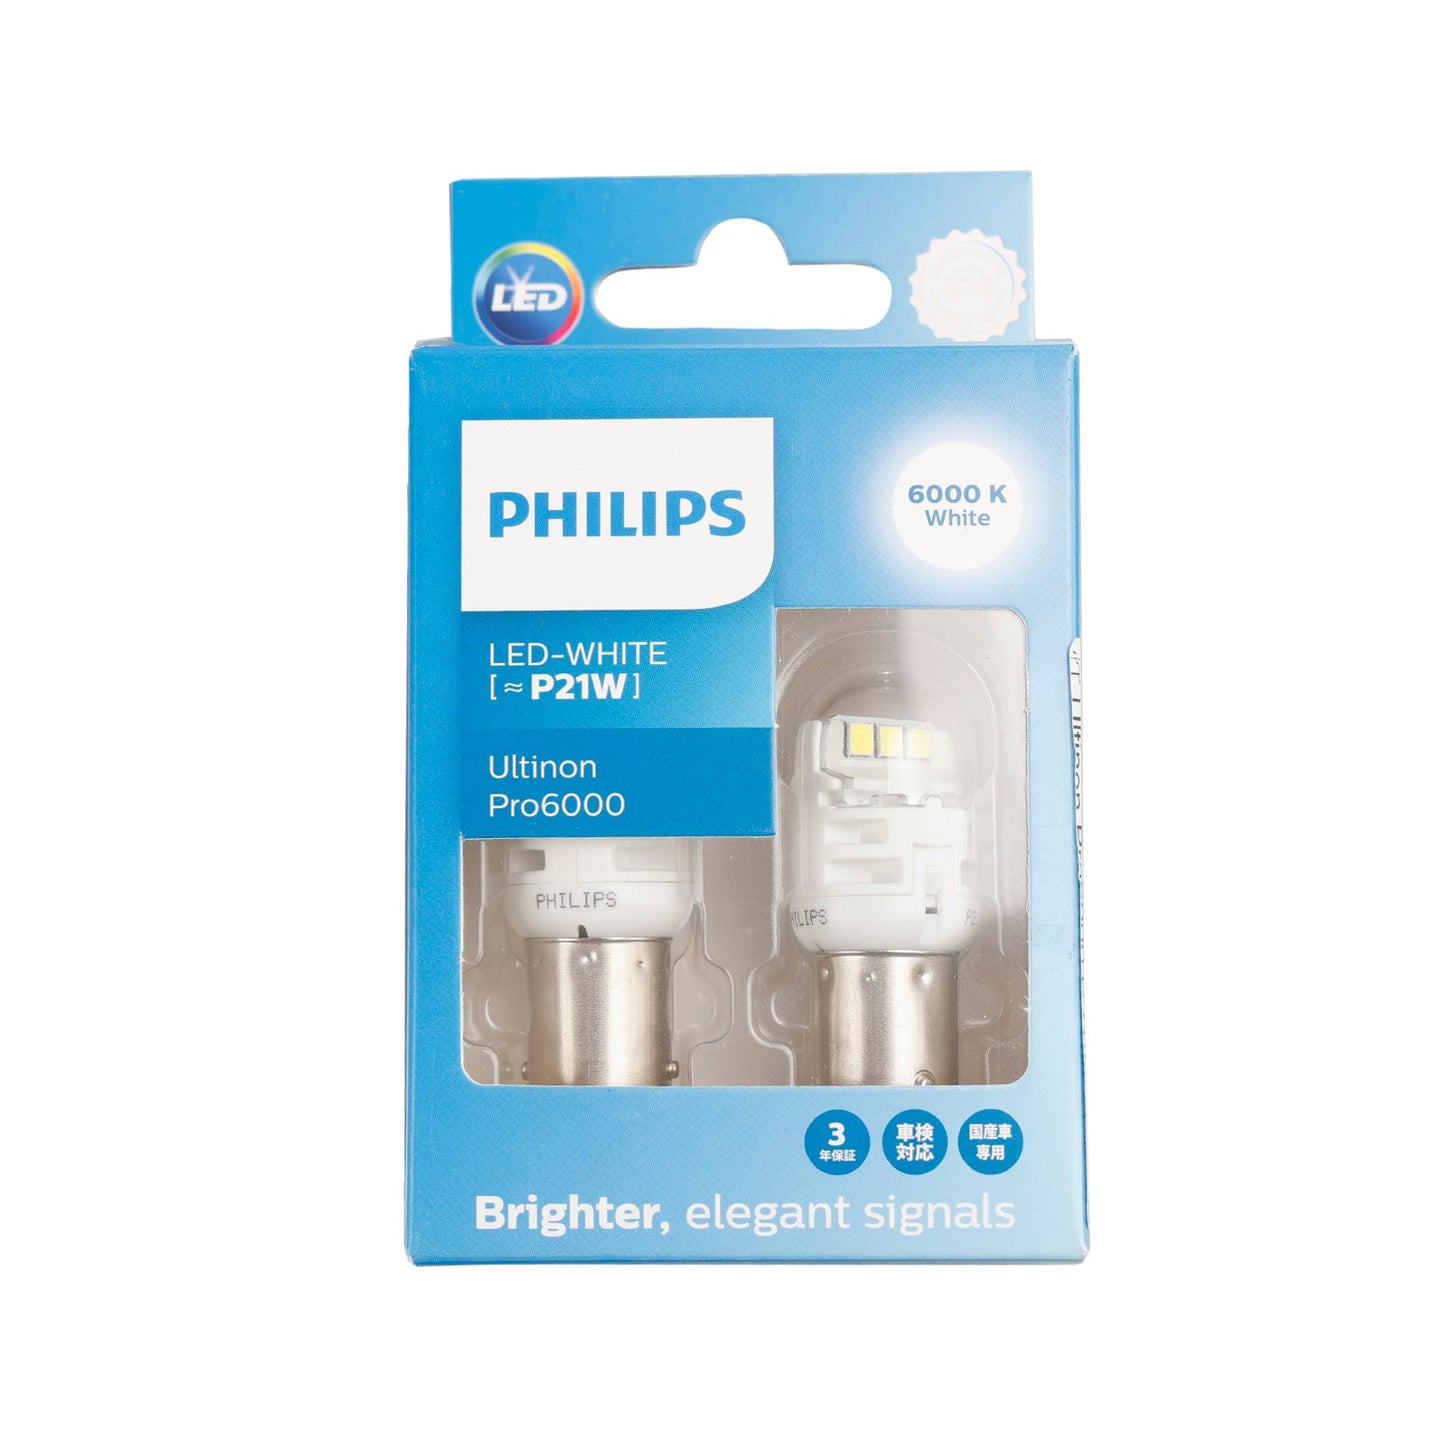 Für Philips 11498CU60X2 Ultinon Pro6000 LED-WEISS P21W 6000K 250lm